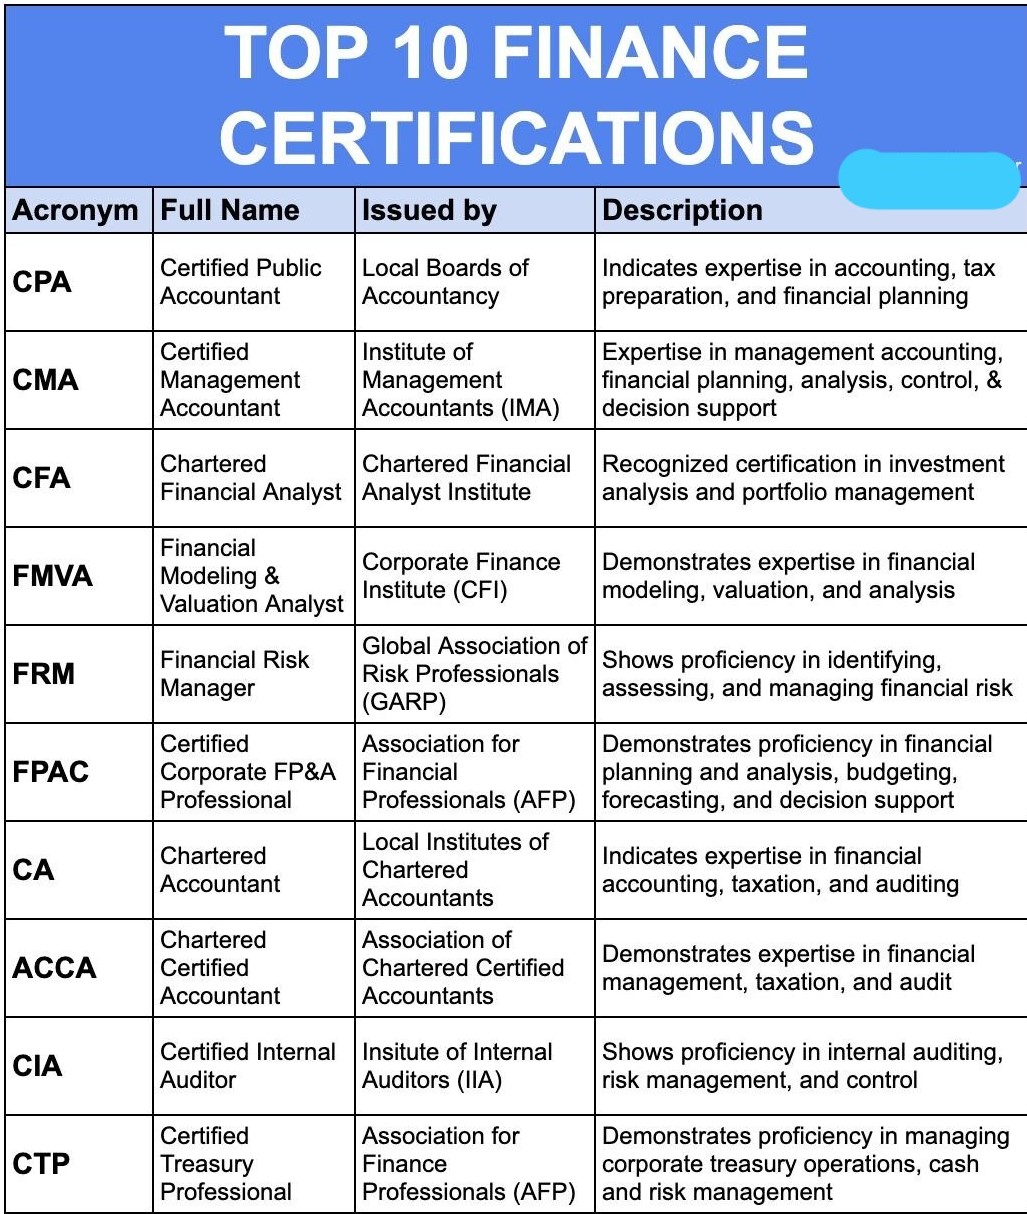 Top certification of Finance.